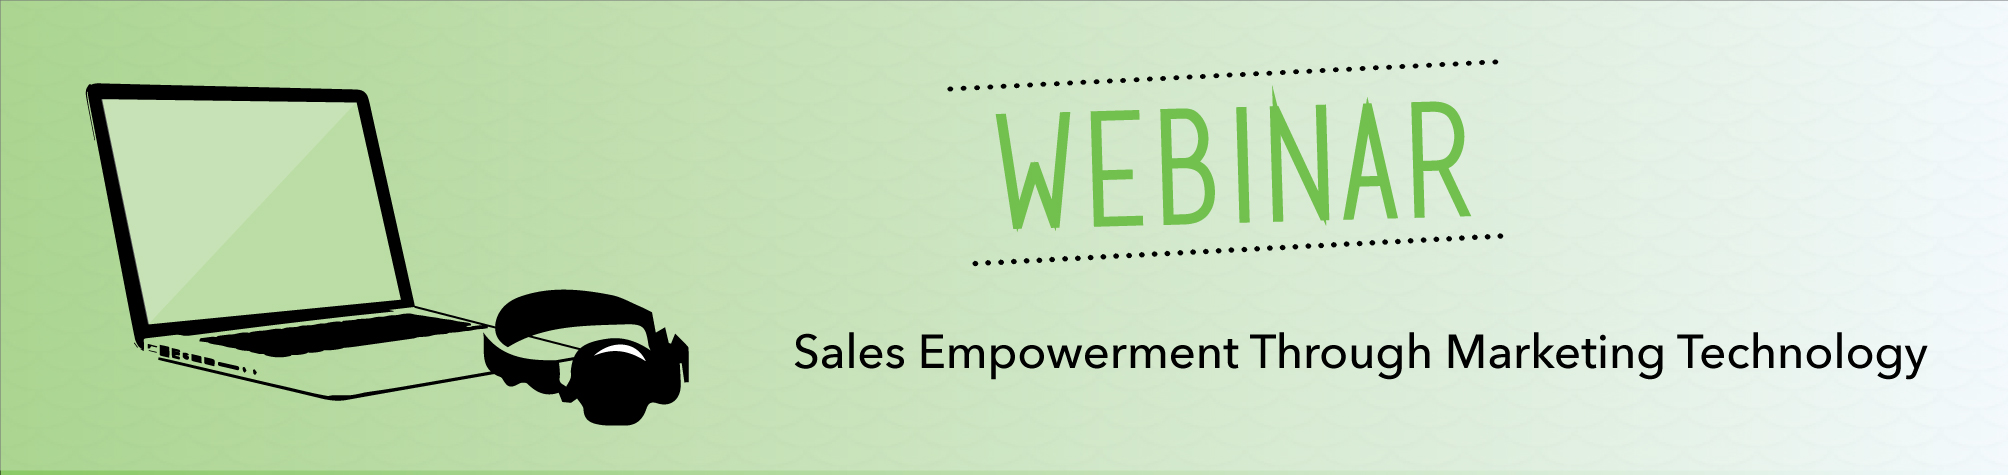 sales empowerment through marketing technology